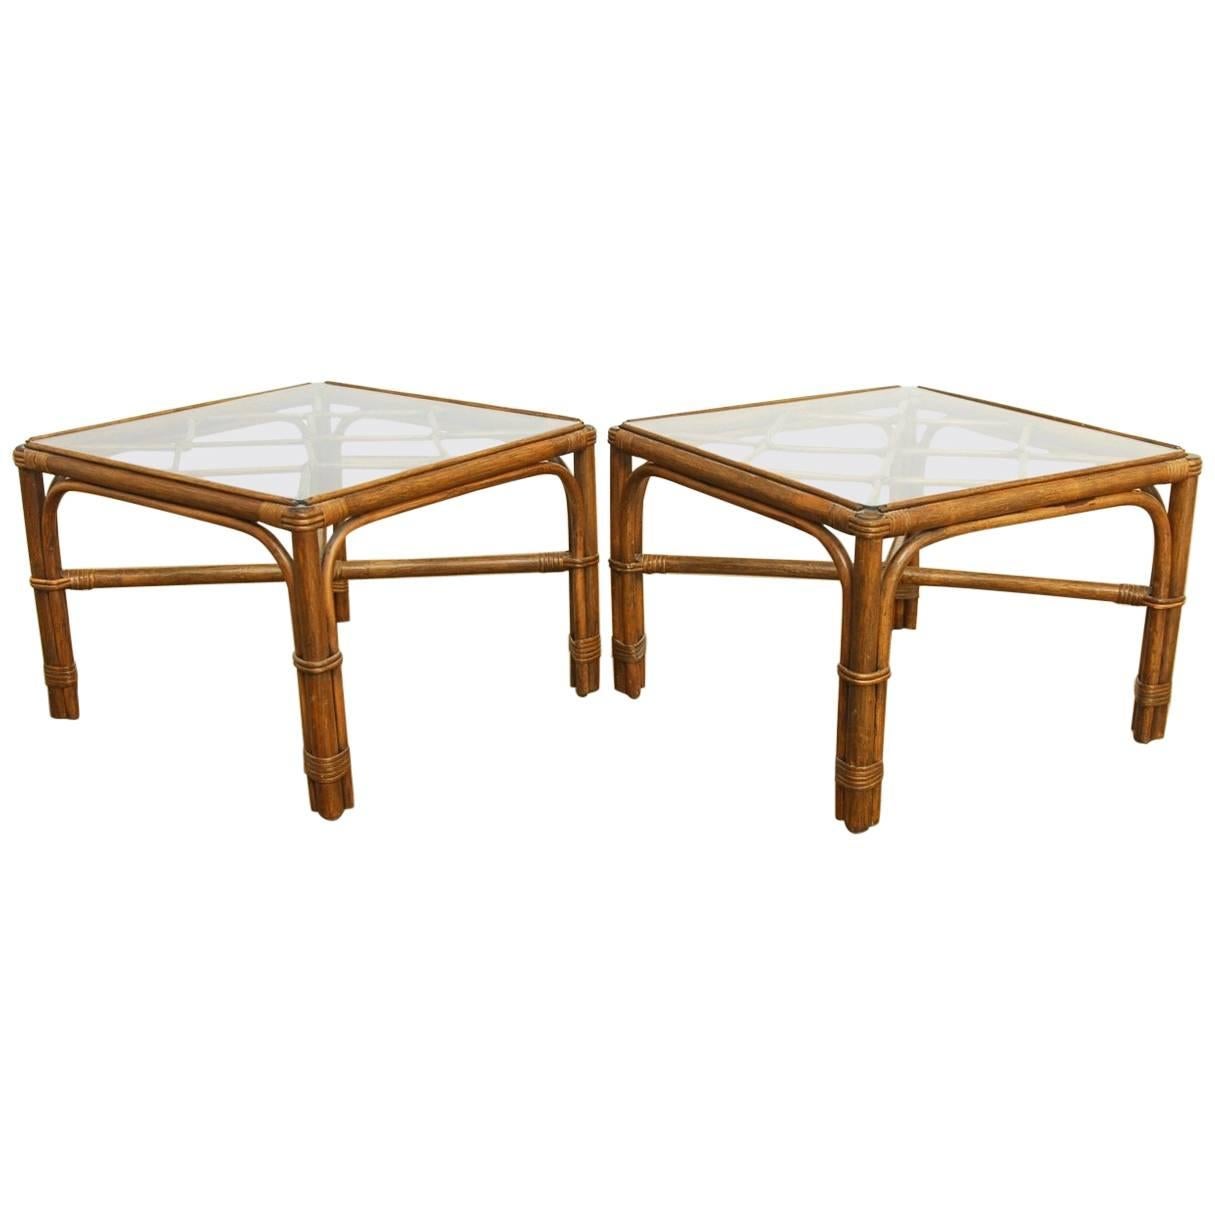 Pair of Bamboo Rattan Side Tables by Brown Jordan